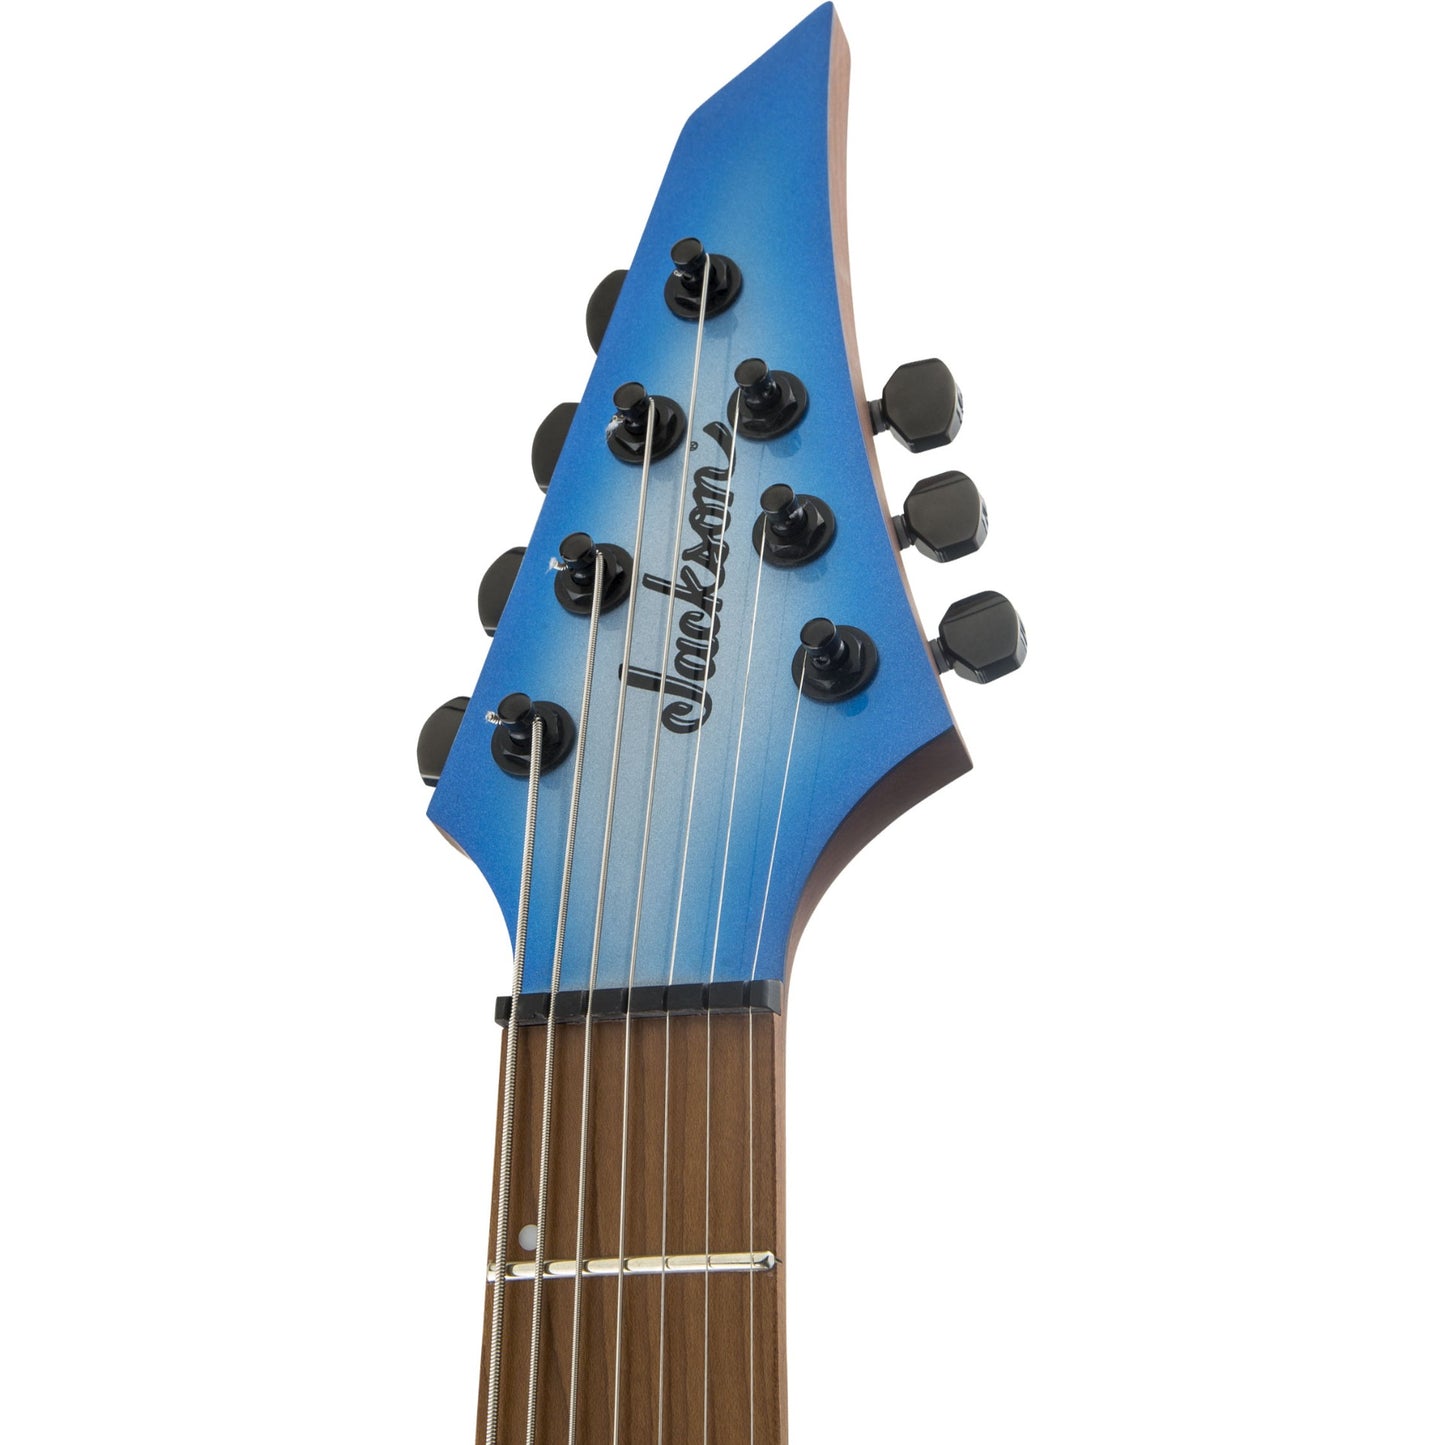 Jackson Pro Series Misha Mansoor Juggernaut HT7 Electrical Guitar, Blue Sky Burst